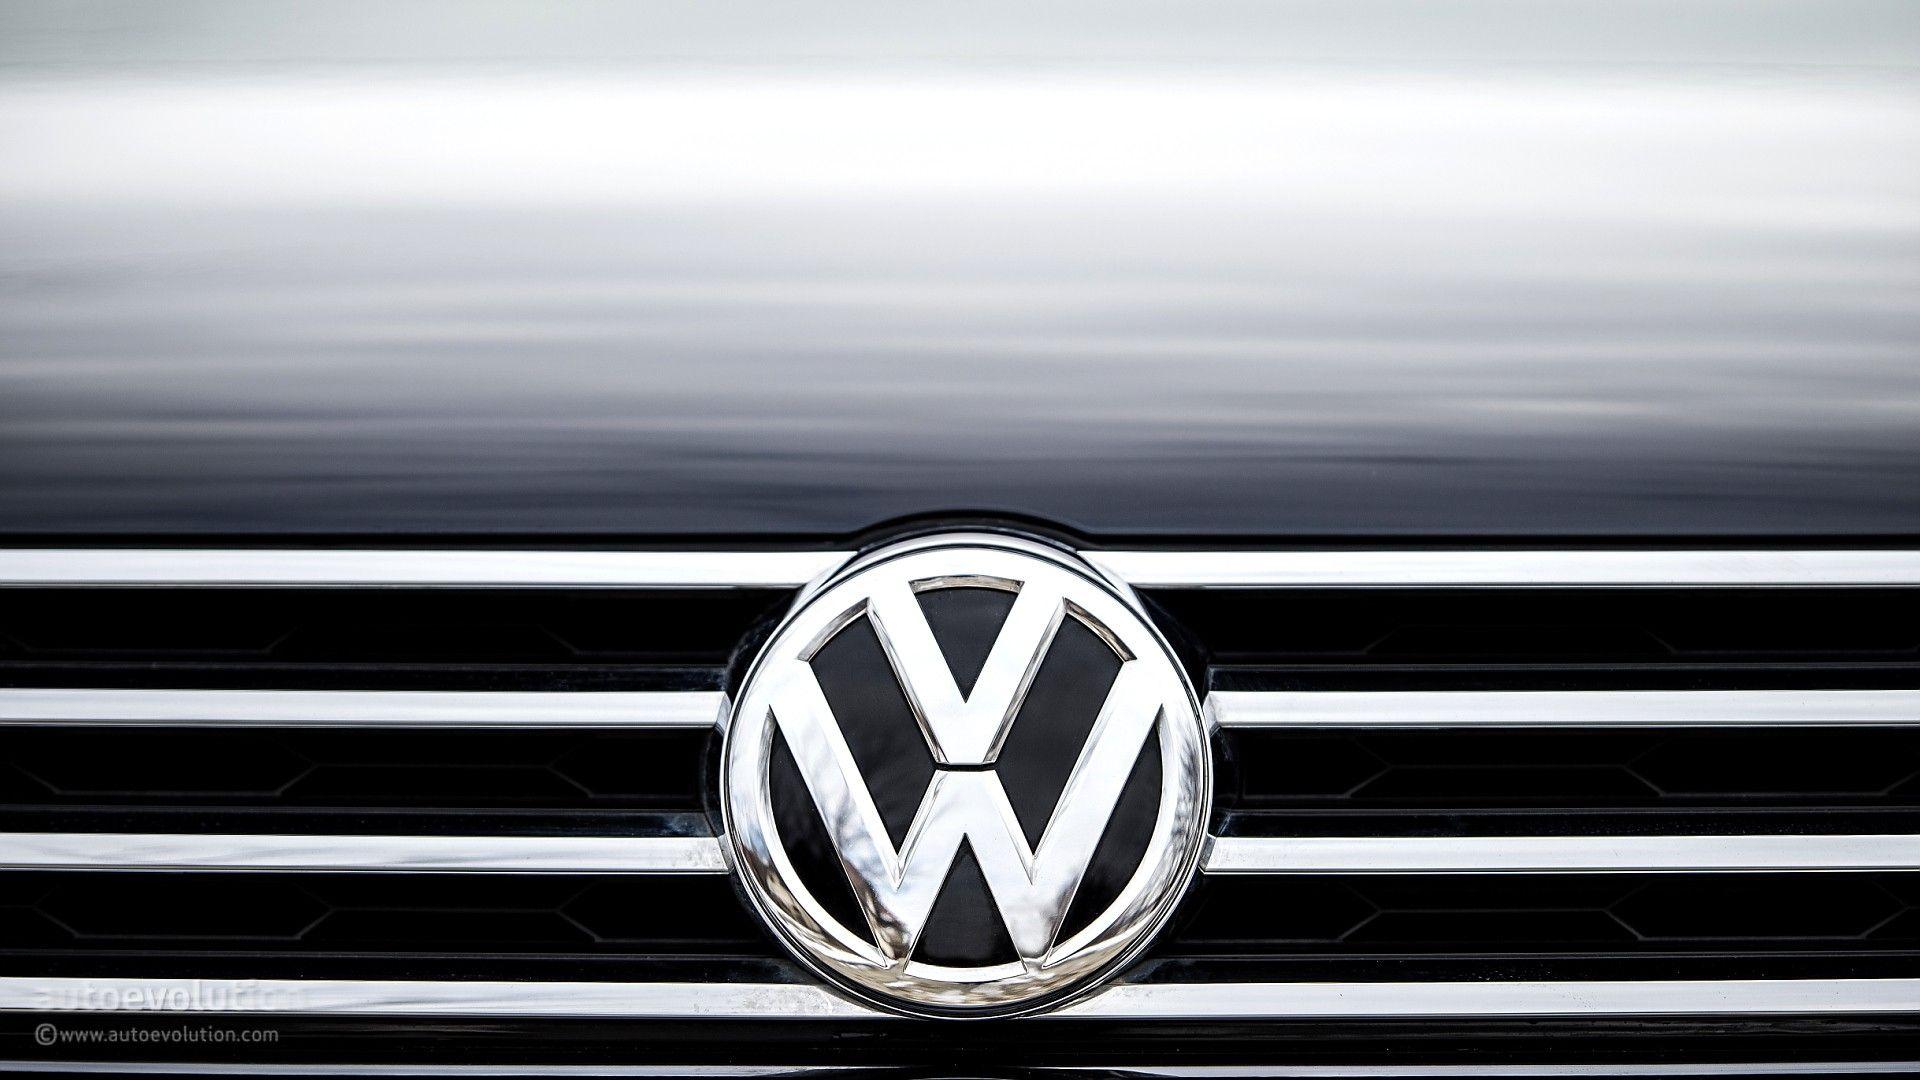 VW Grill Logo - 2015 VOLKSWAGEN Touareg Review - autoevolution